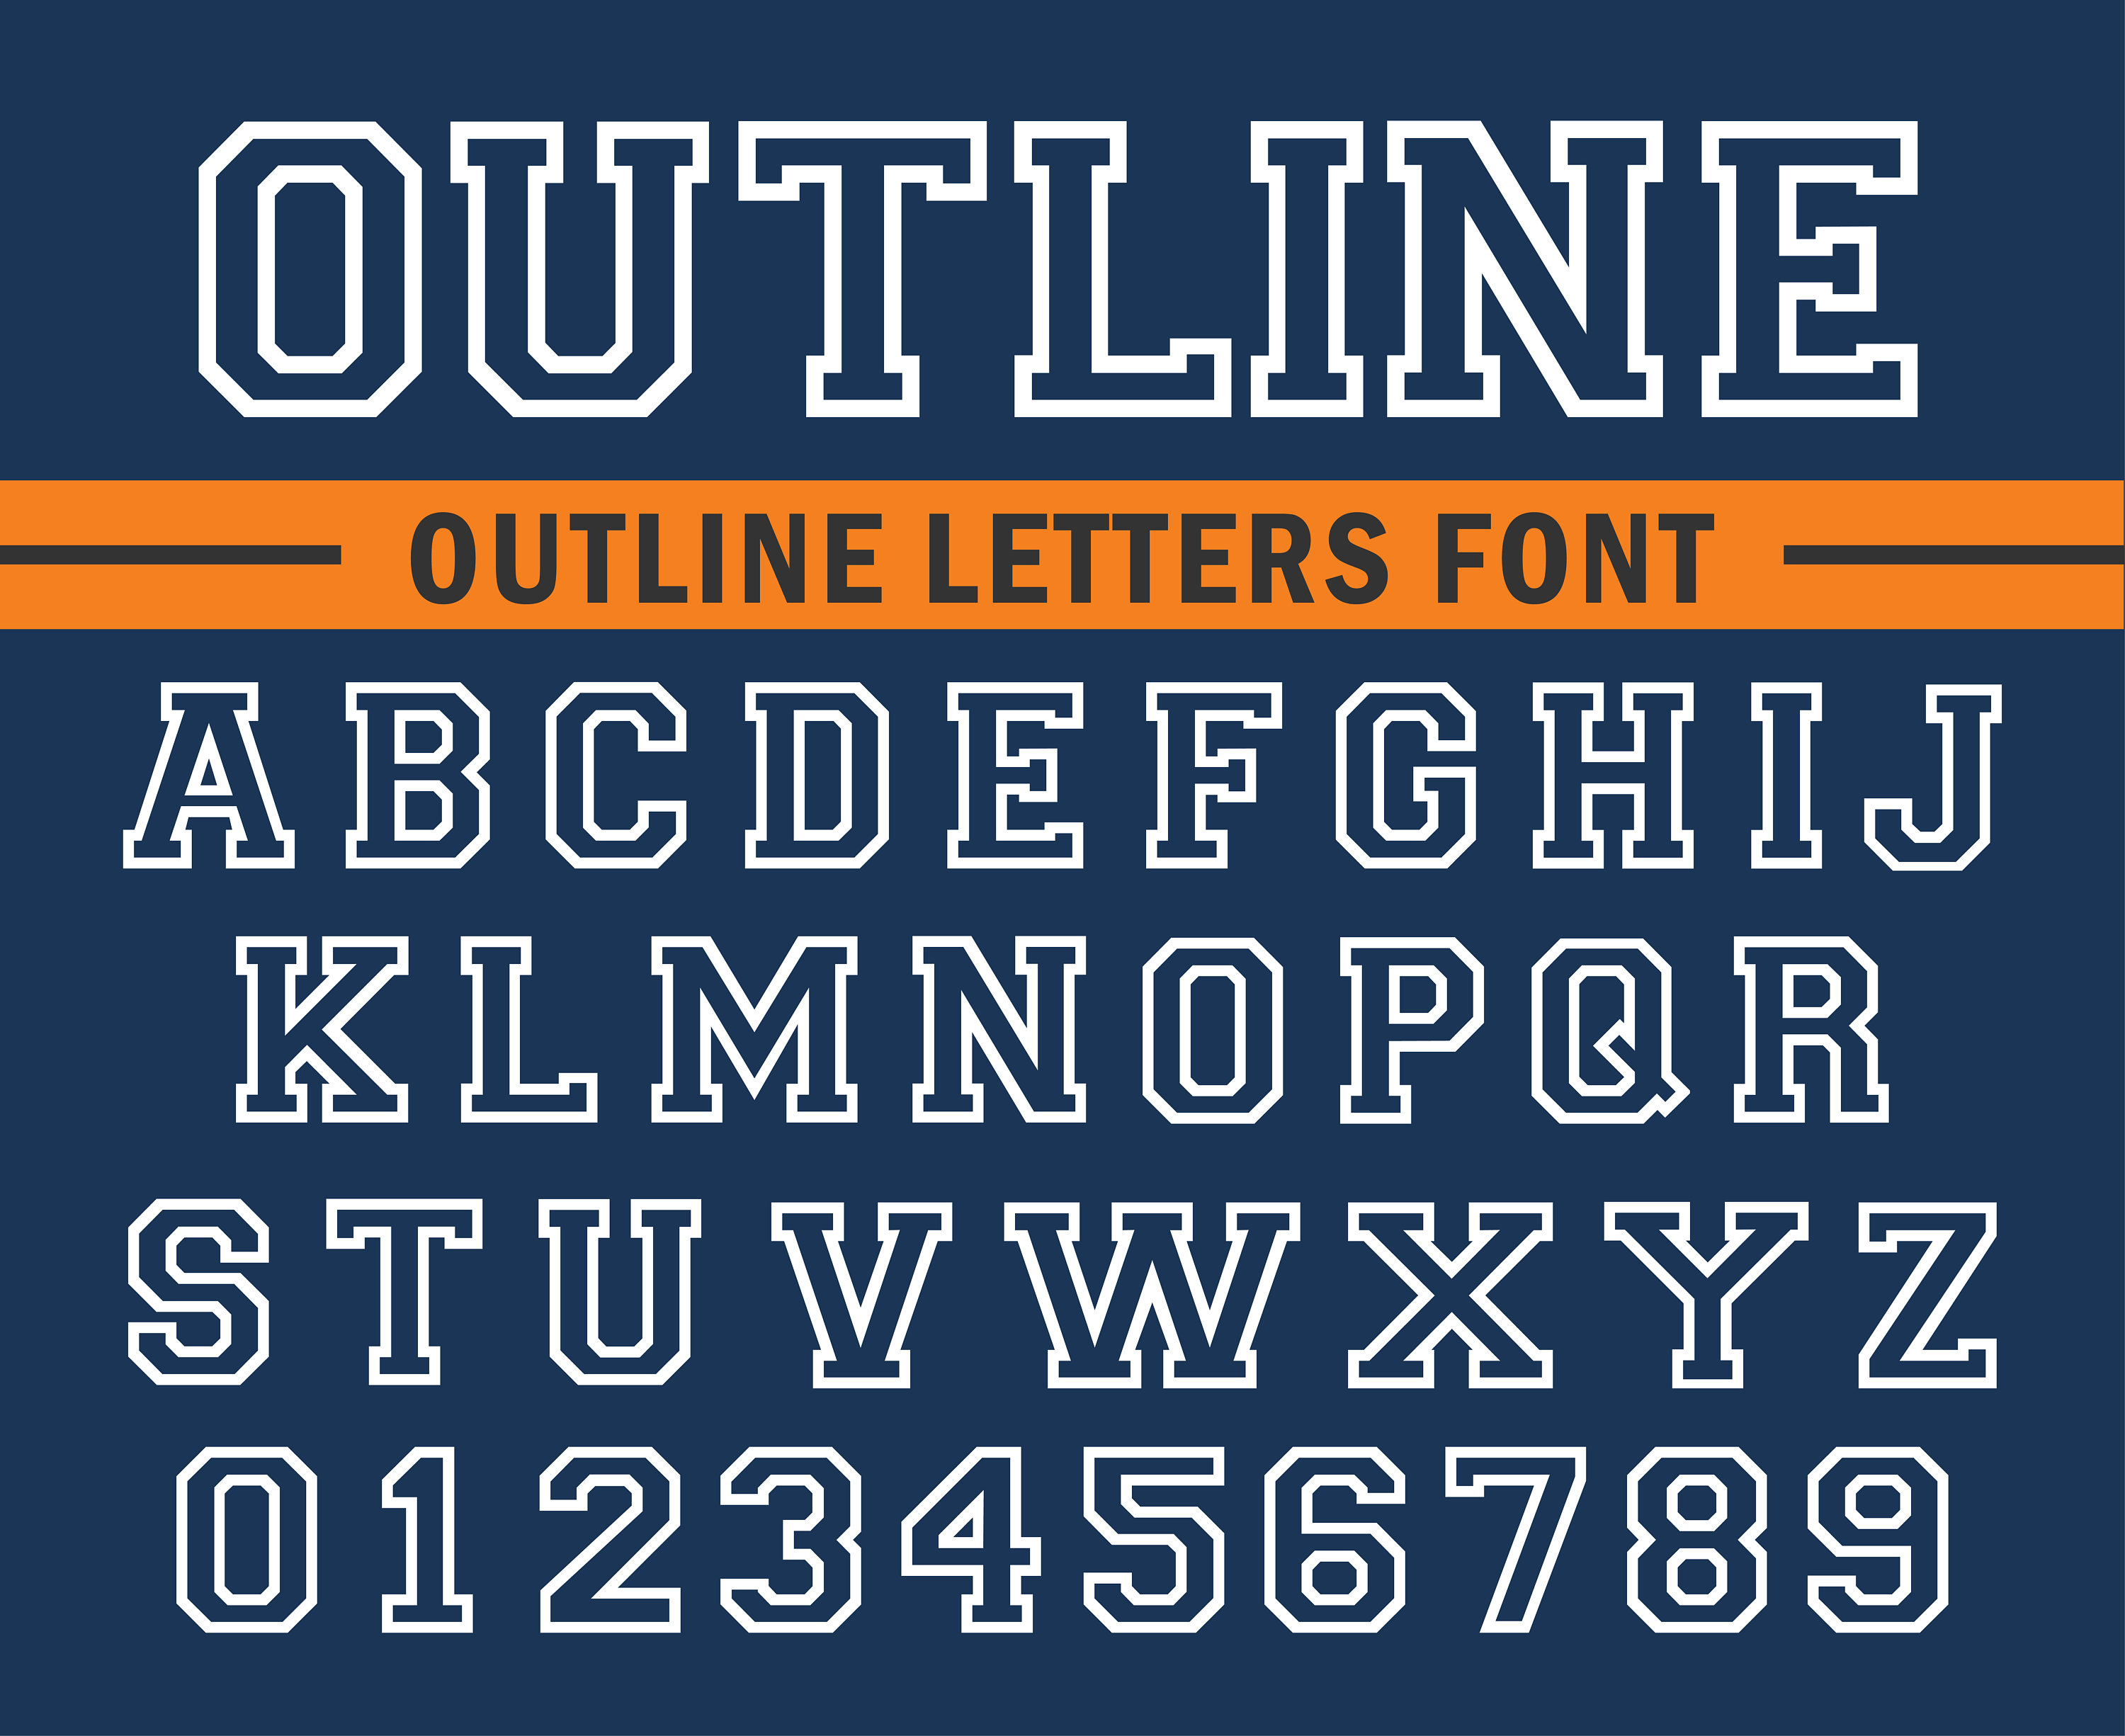 cool block letter fonts